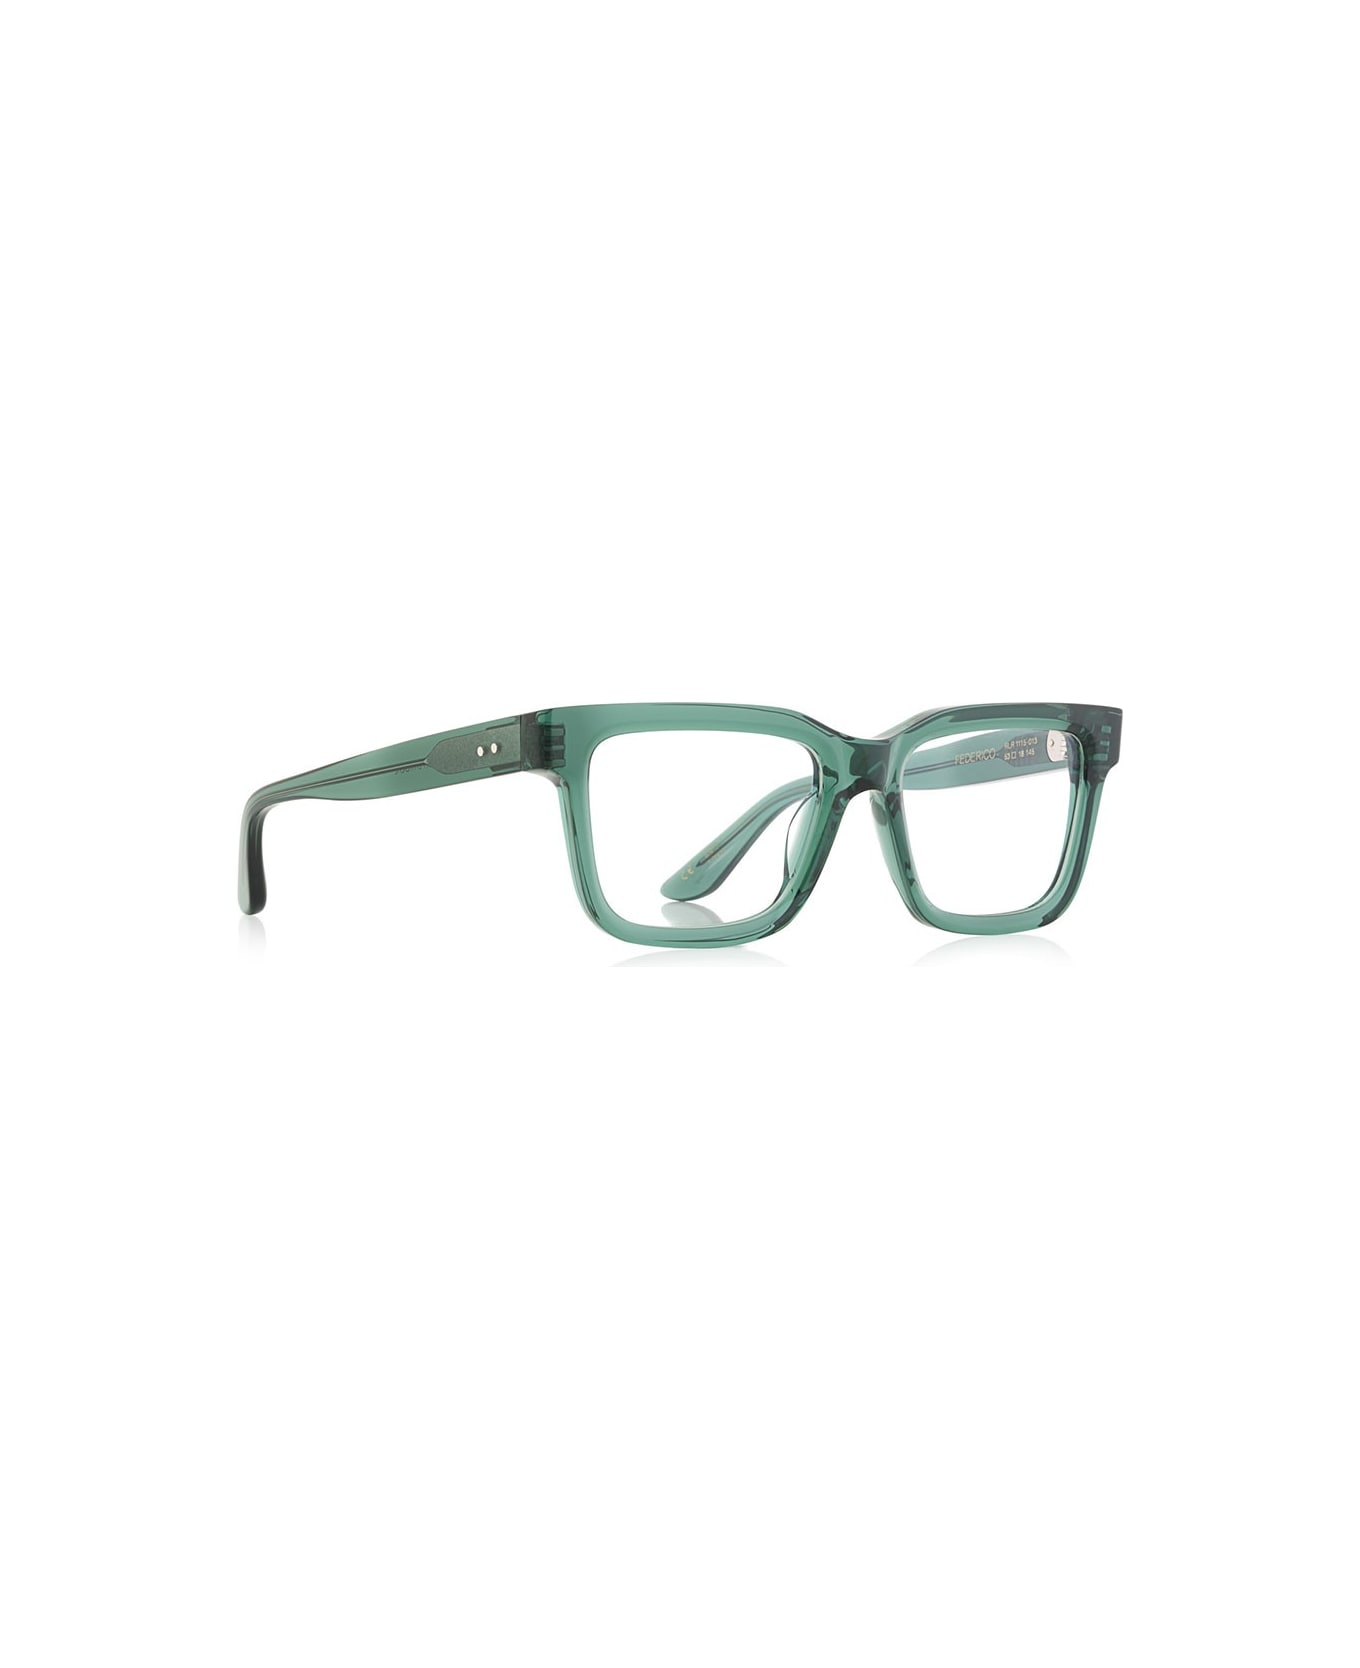 Robert La Roche Glasses - Verde アイウェア